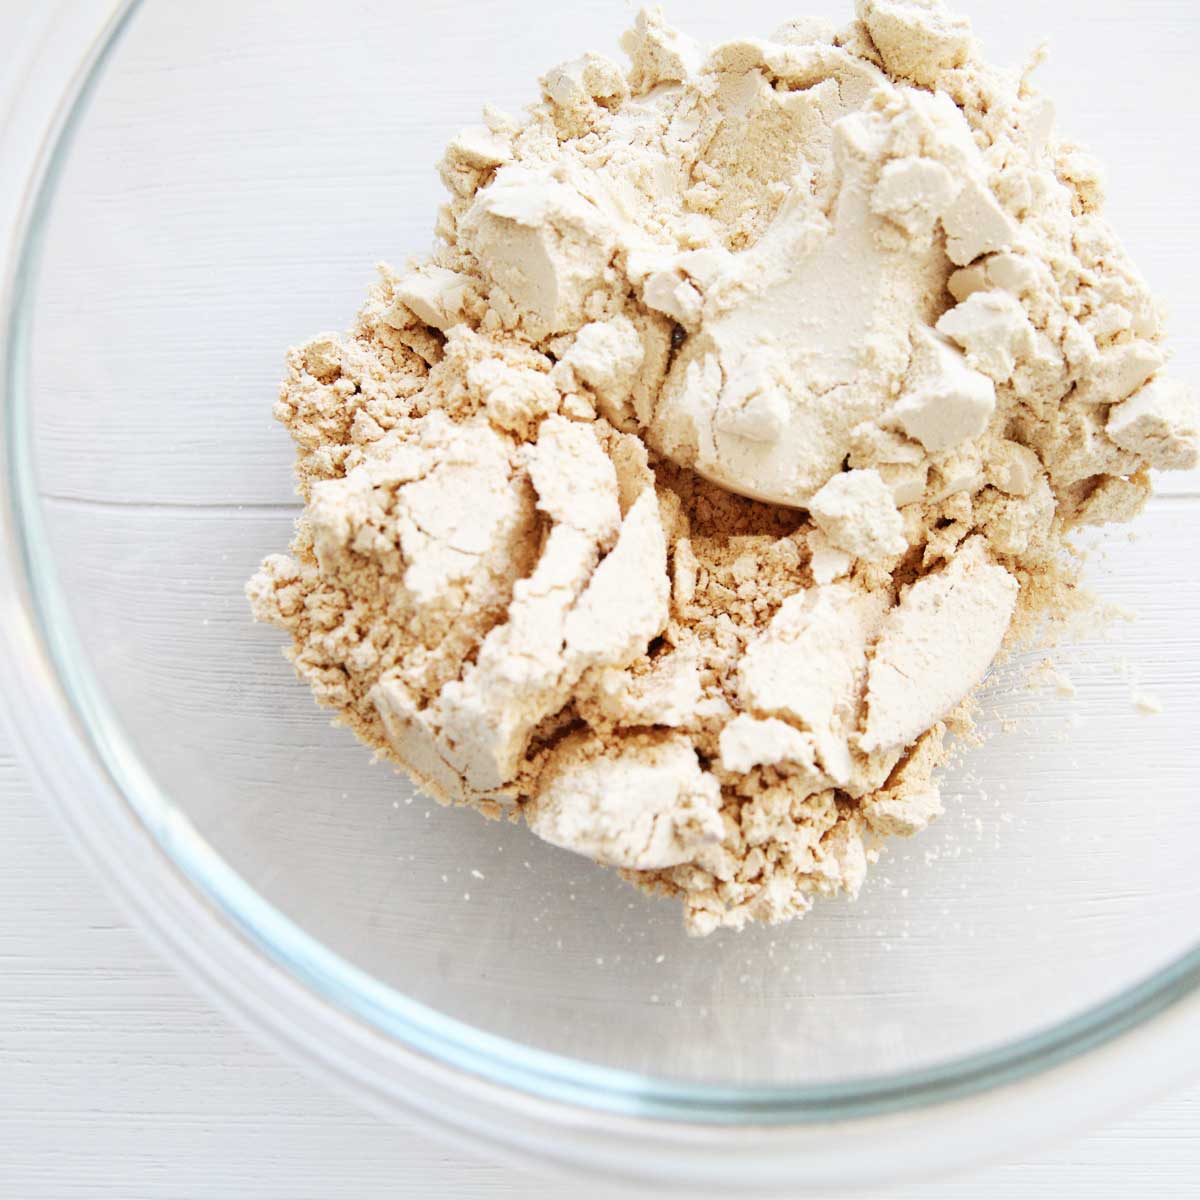 Greek Yogurt PB Fit Protein Bars Recipe (Only 4 Ingredients) - PB Fit Protein Bars